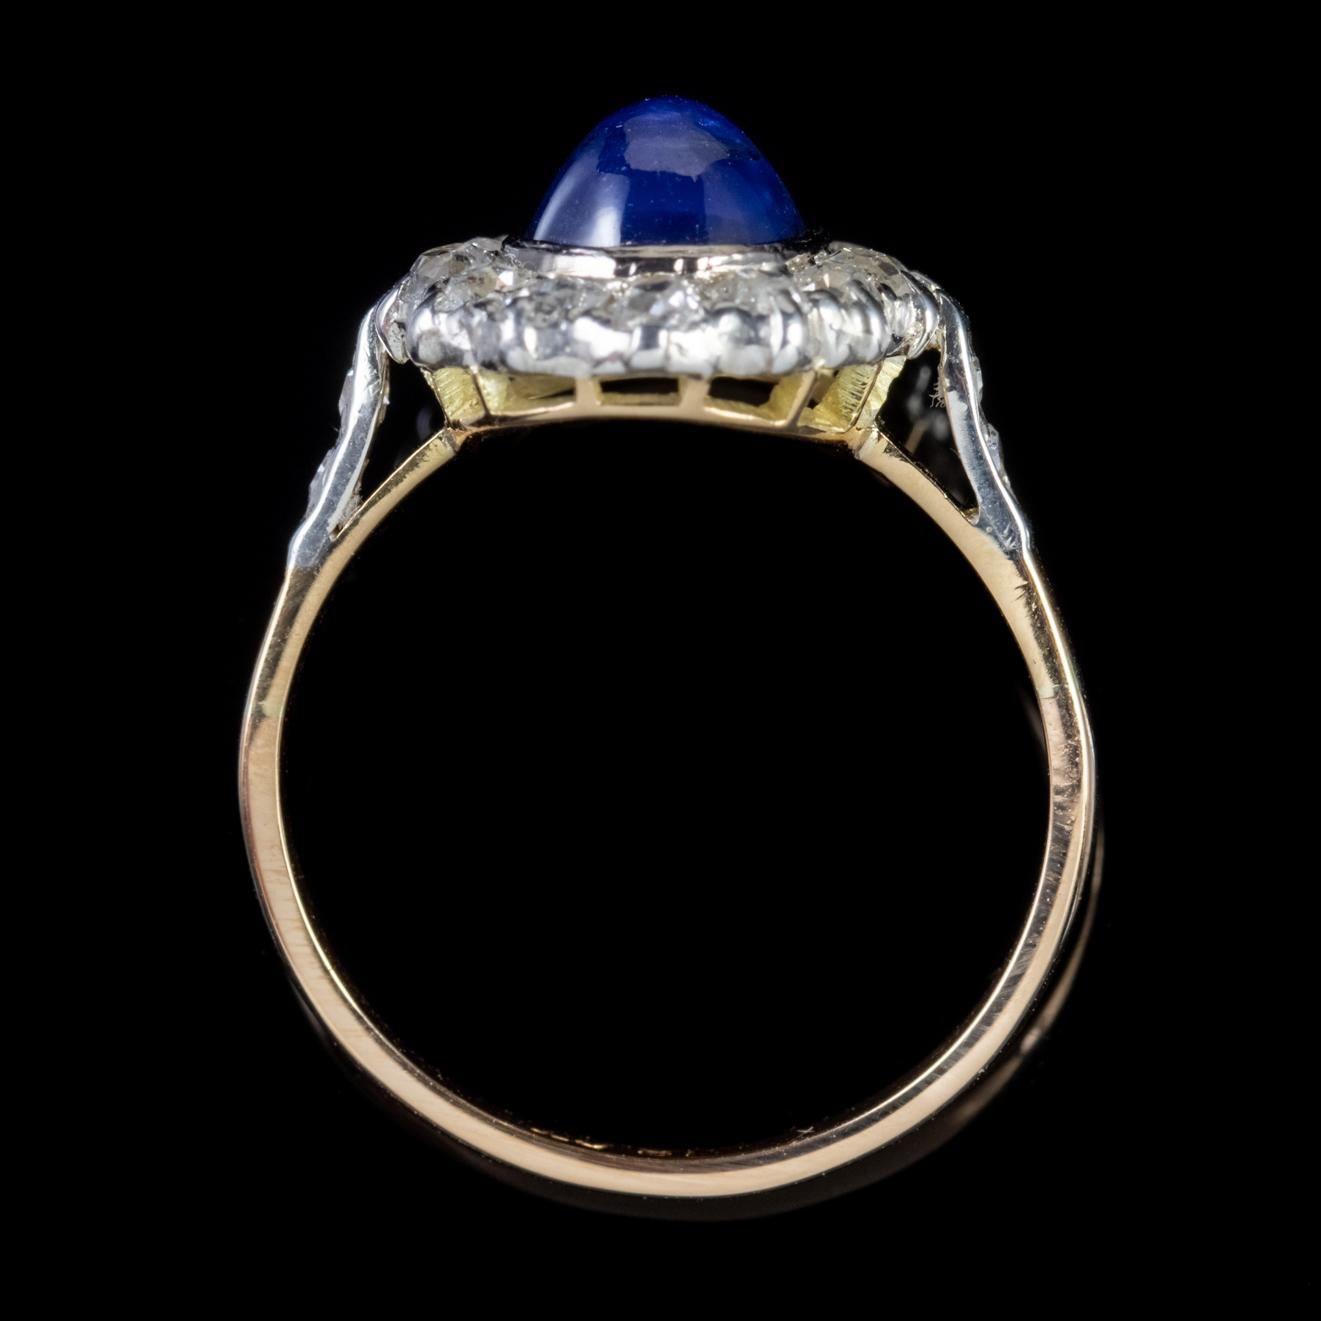 Antique Victorian Cabochon Sapphire Diamond Ring 18 Carat Gold, circa 1880 For Sale 3